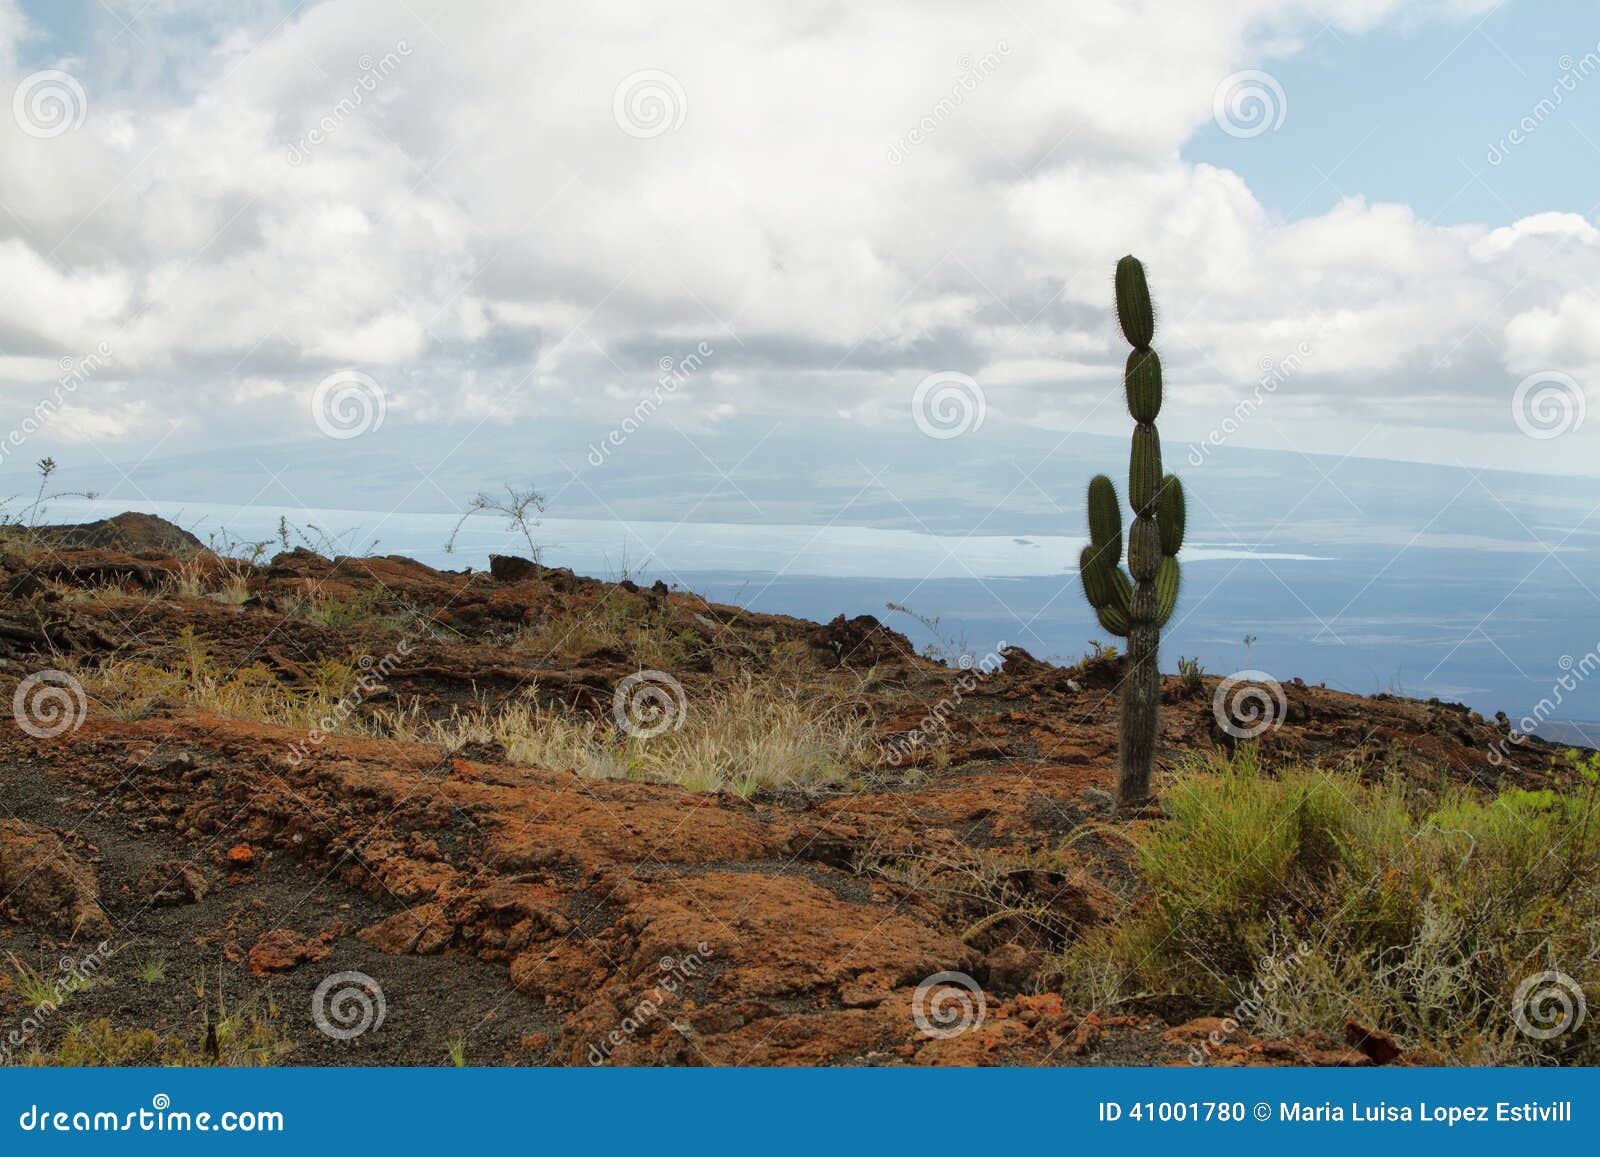 volcanic landscape, sierra negra, galapagos.